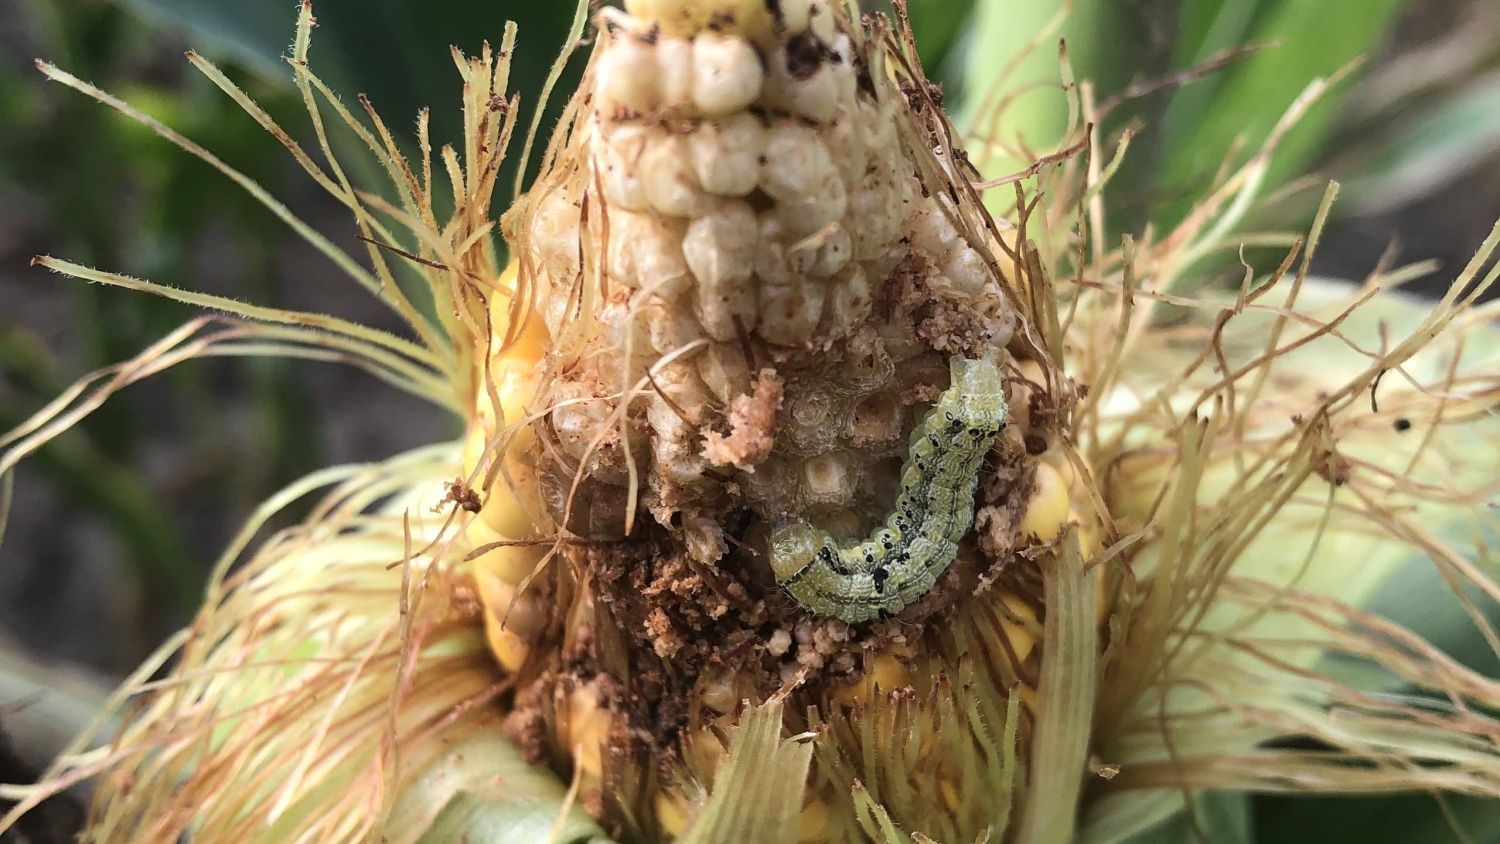 Corn earworm attacking corn plant.